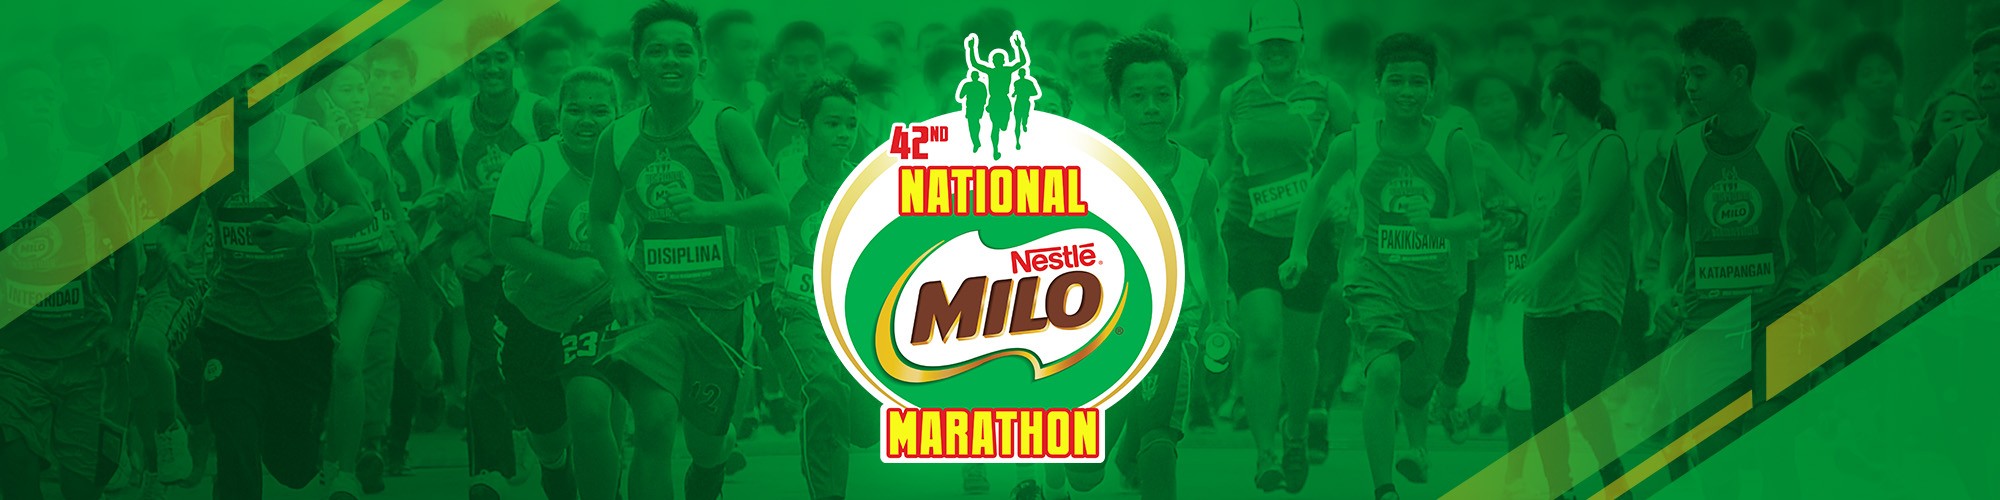 42nd National MILO Marathon - Tarlac Leg